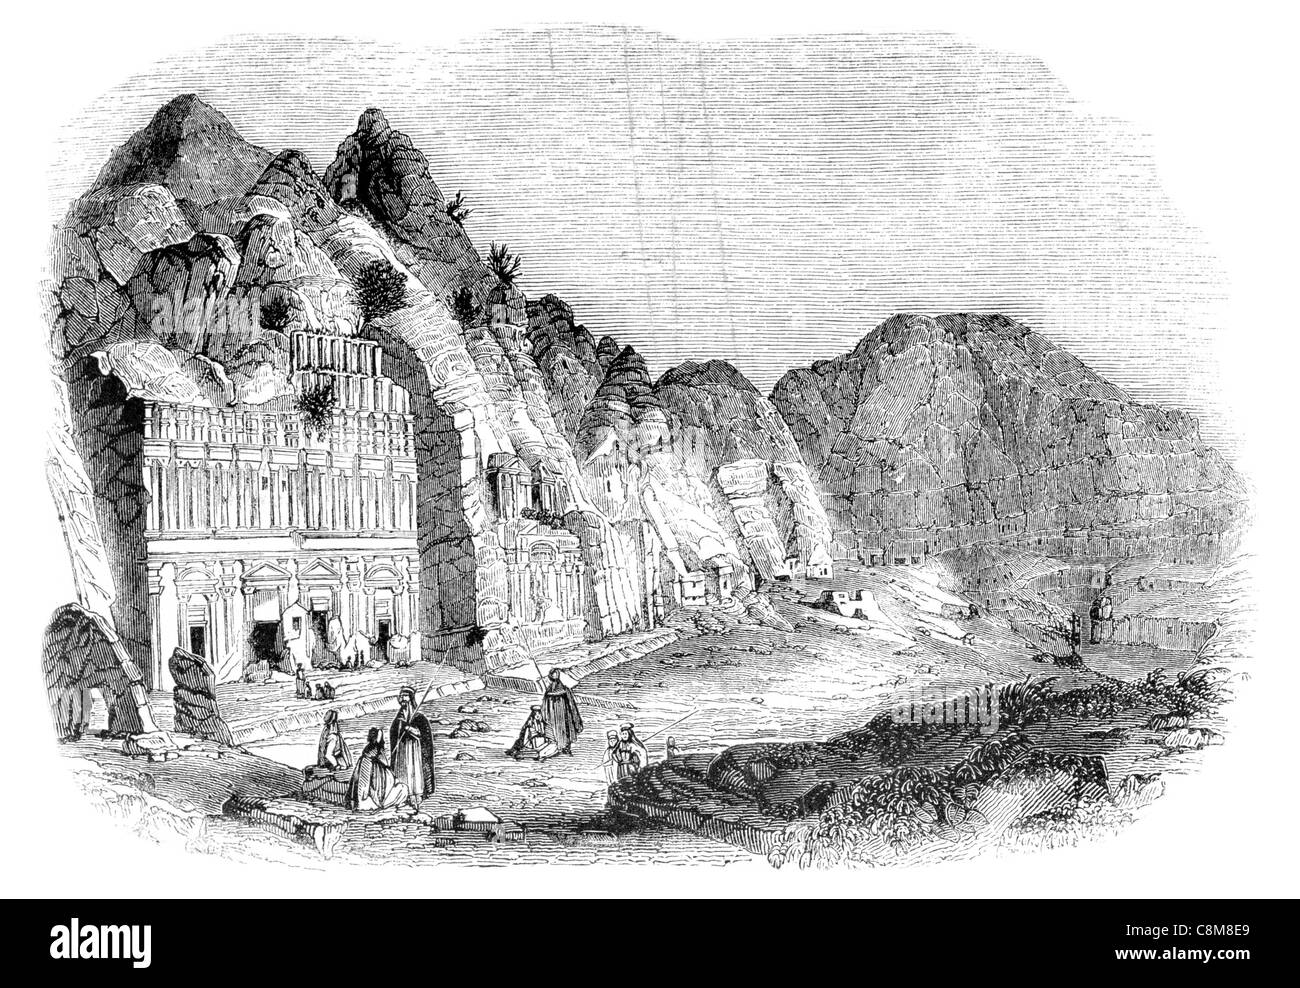 Tempel Joktheel Petra historische archäologische Stadt jordanischen Maan Fels geschnitten Architektur Touristenattraktion es Berg Hor Stockfoto